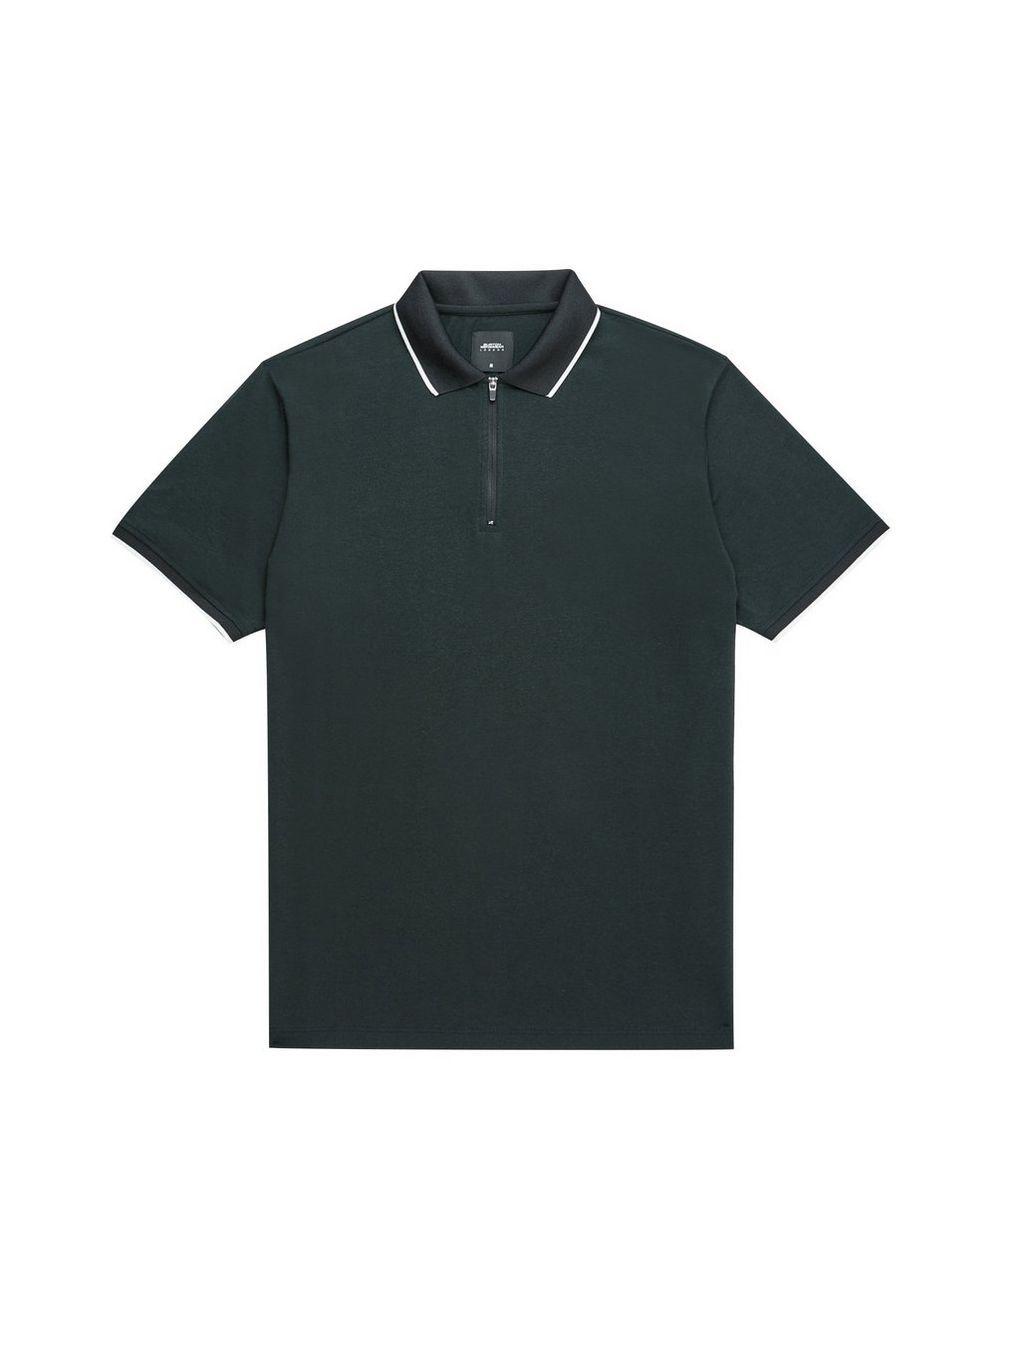 Black Grass Logo - Black Grass Zip Neck Polo Shirt - Burton Menswear